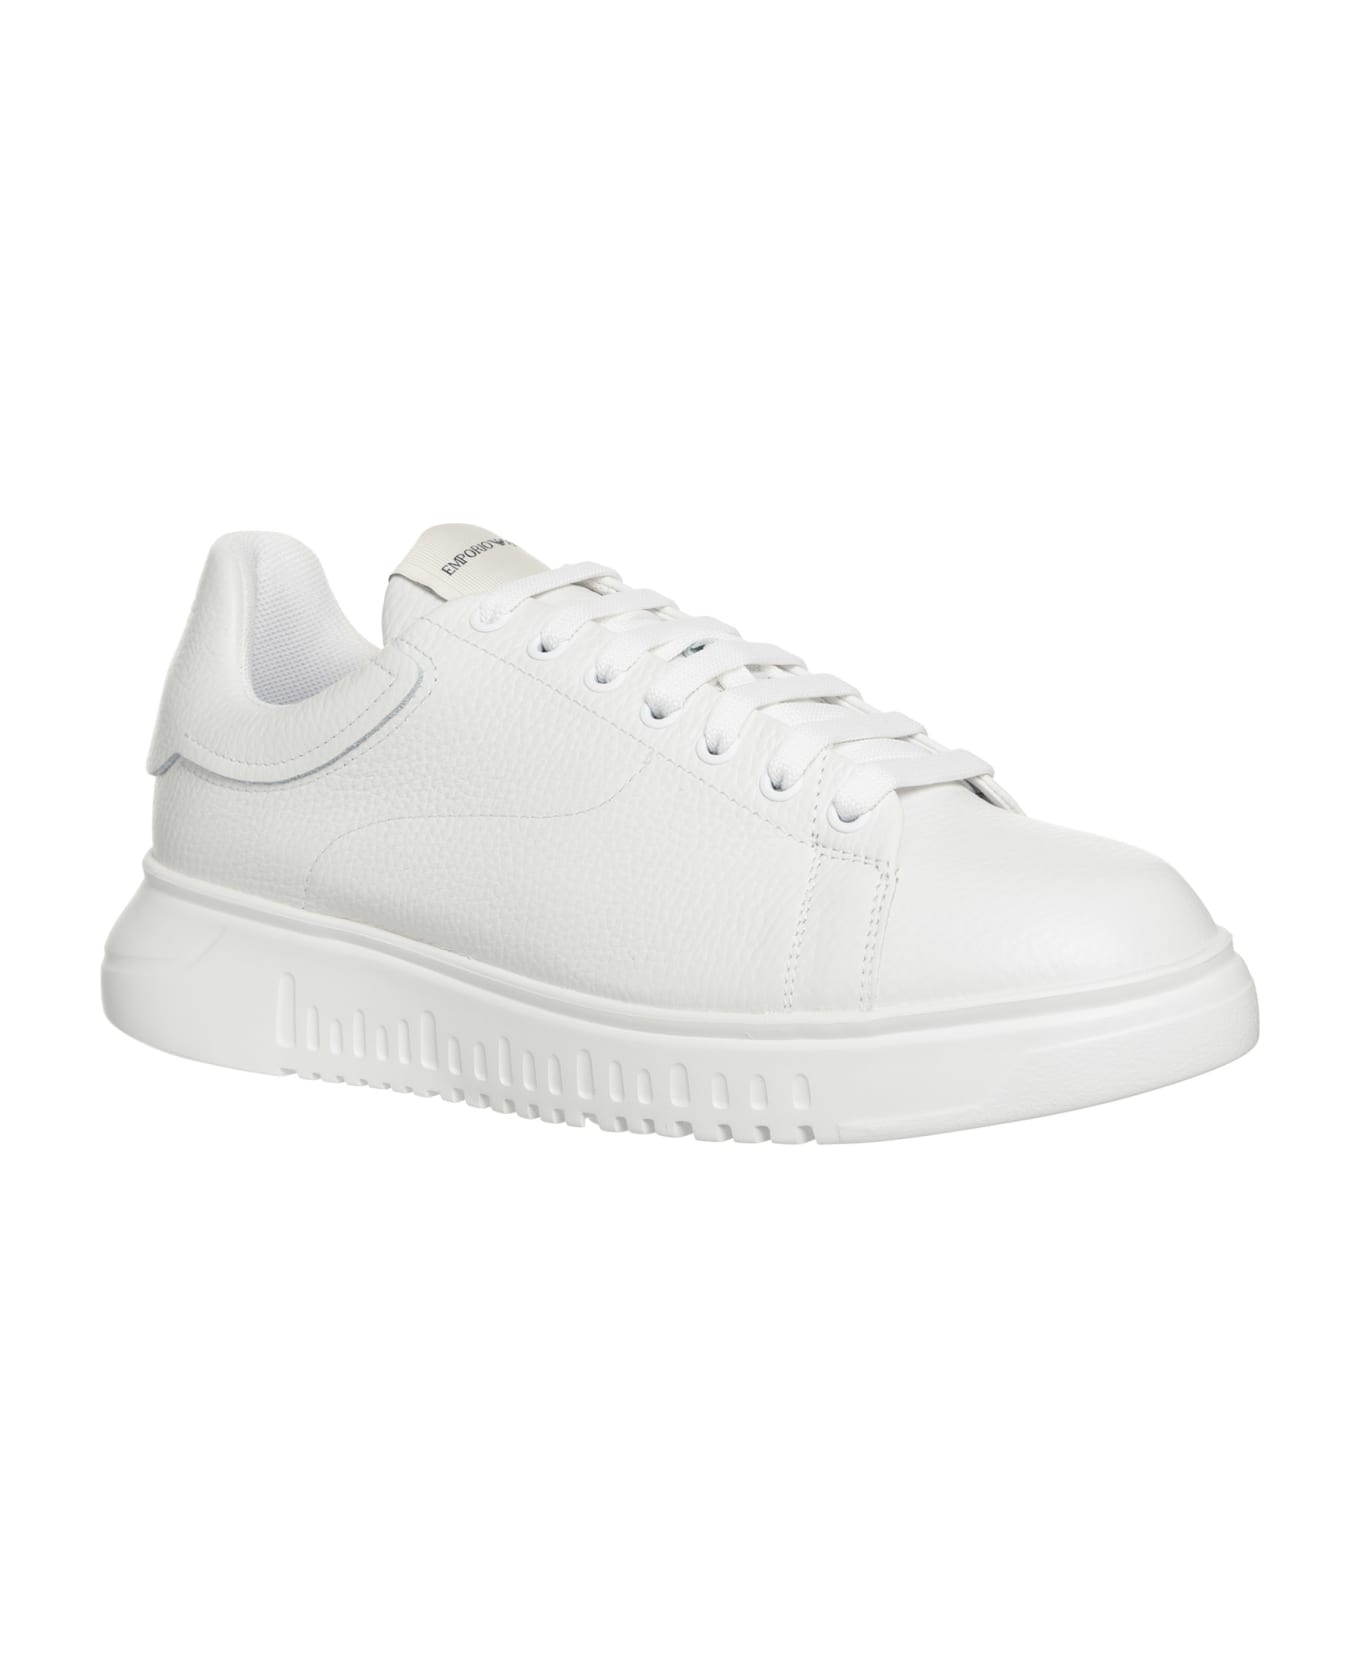 Emporio Armani Leather Sneakers - White